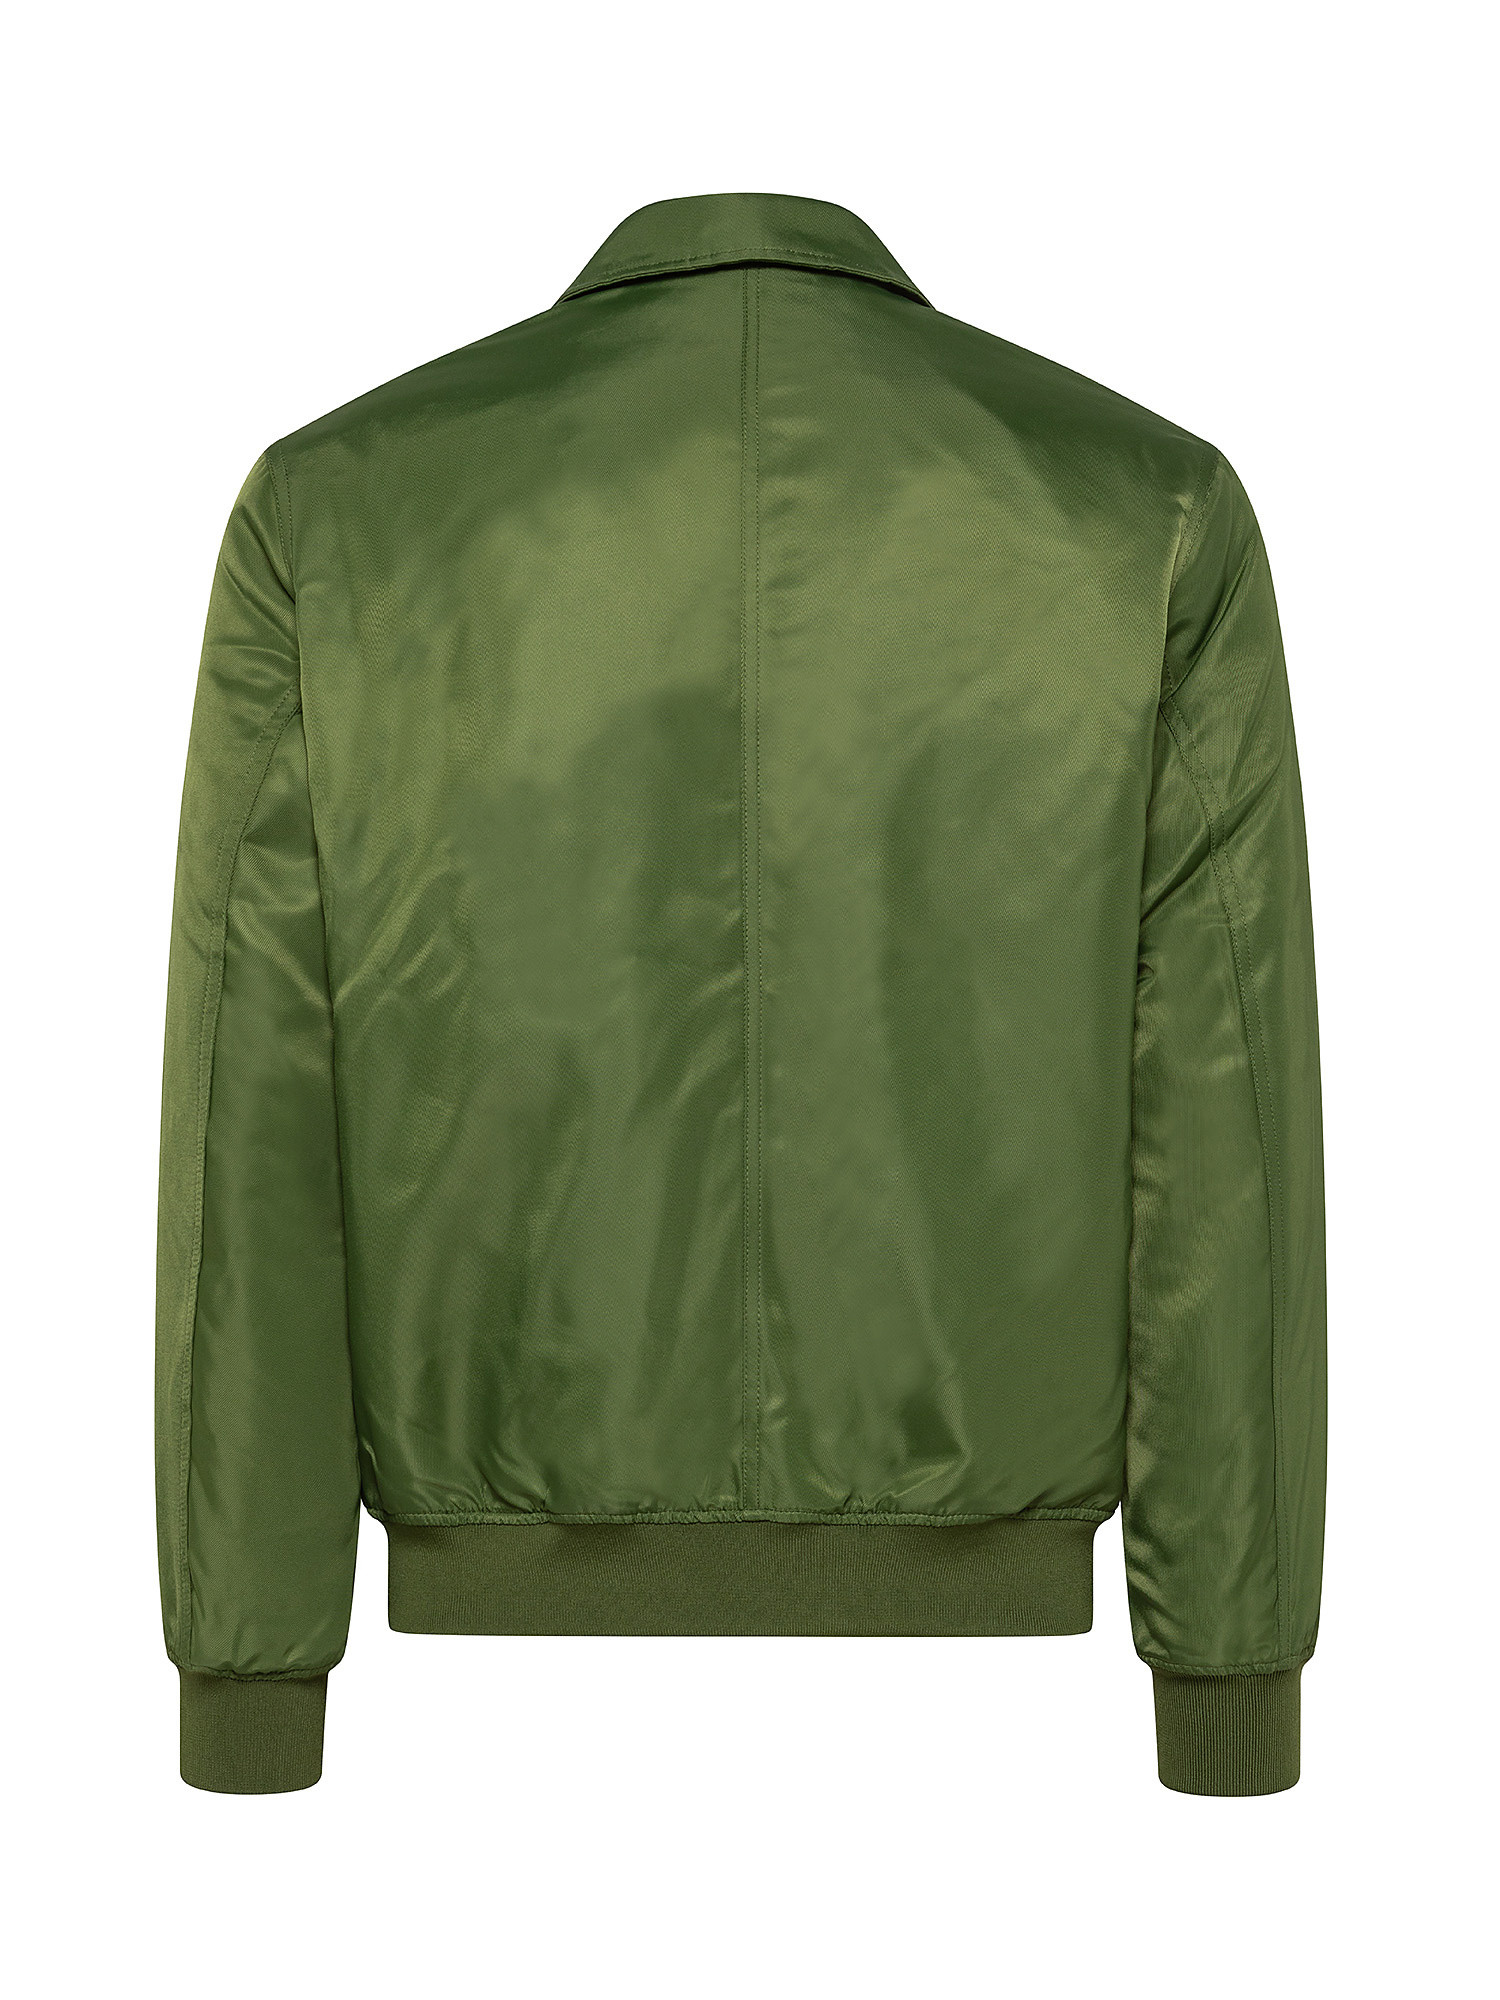 Joseph aviator jacket, Dark Green, large image number 1